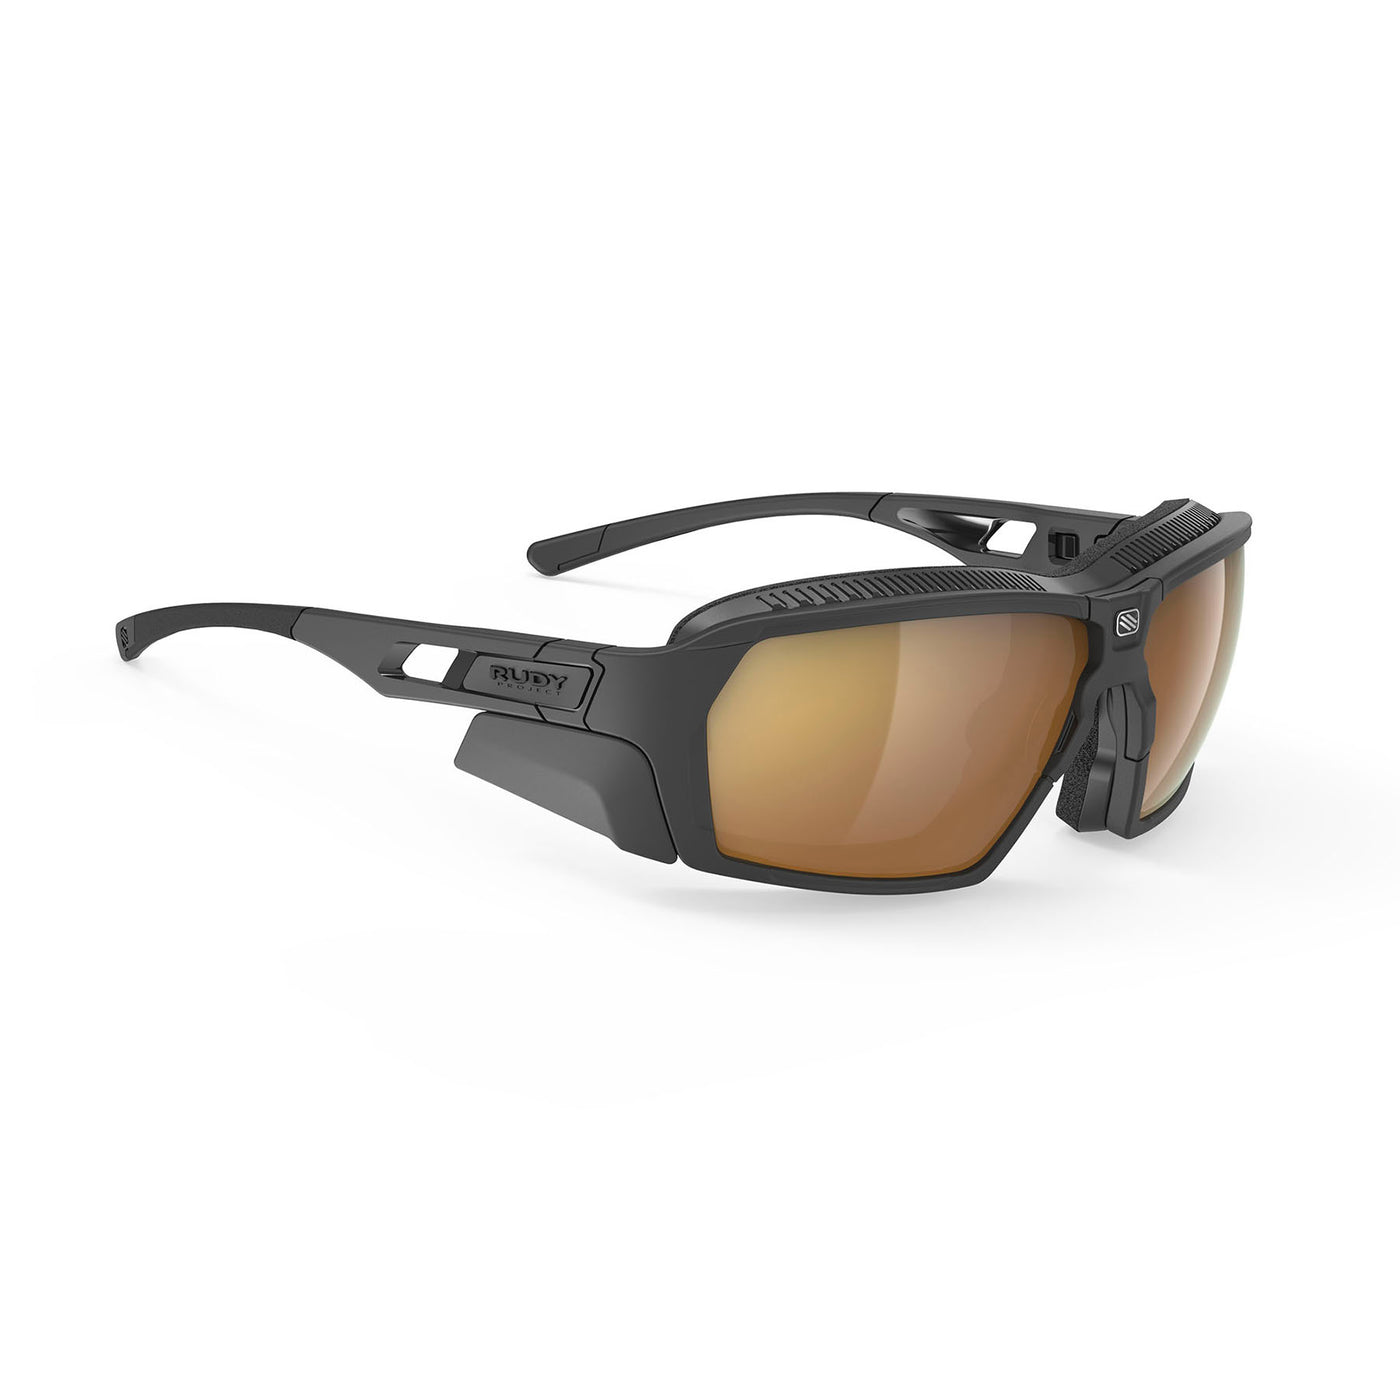 Rudy Project Agent Q prescription hiking and glacier sport sunglasses#color_agent-q-black-matte-with-polar-3fx-brown-laser-lenses